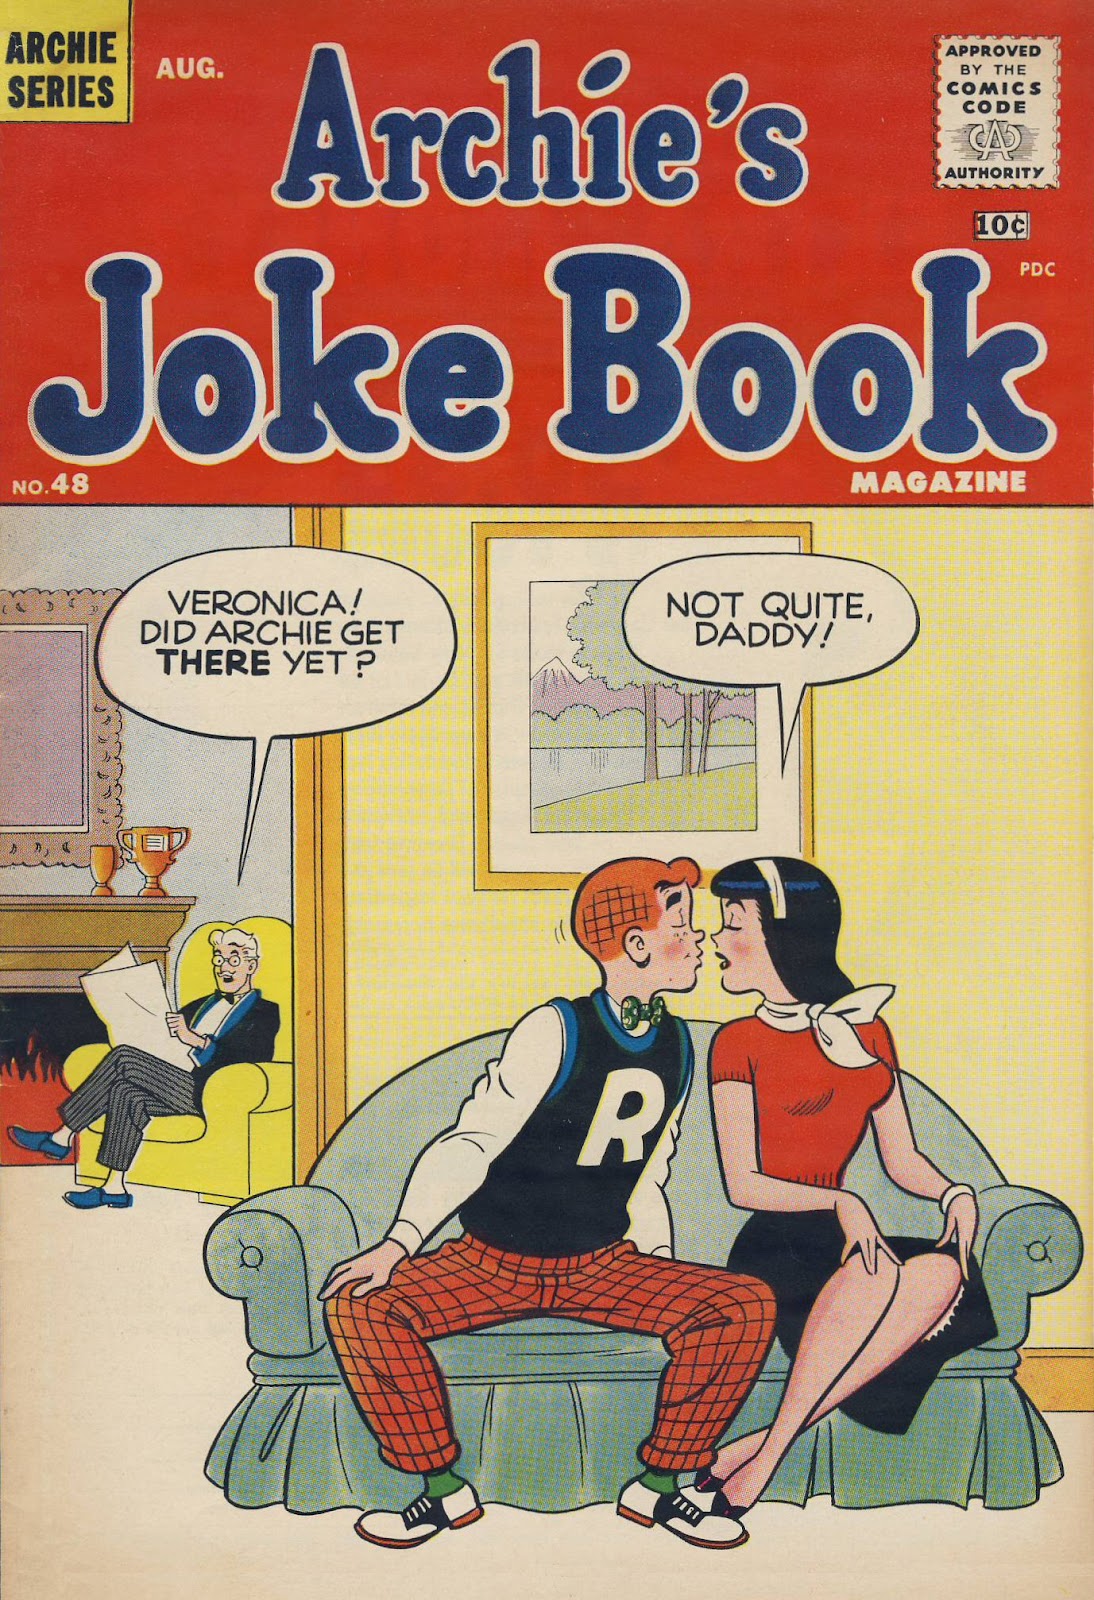 Archie's Joke Book Magazine issue 48 - Page 1